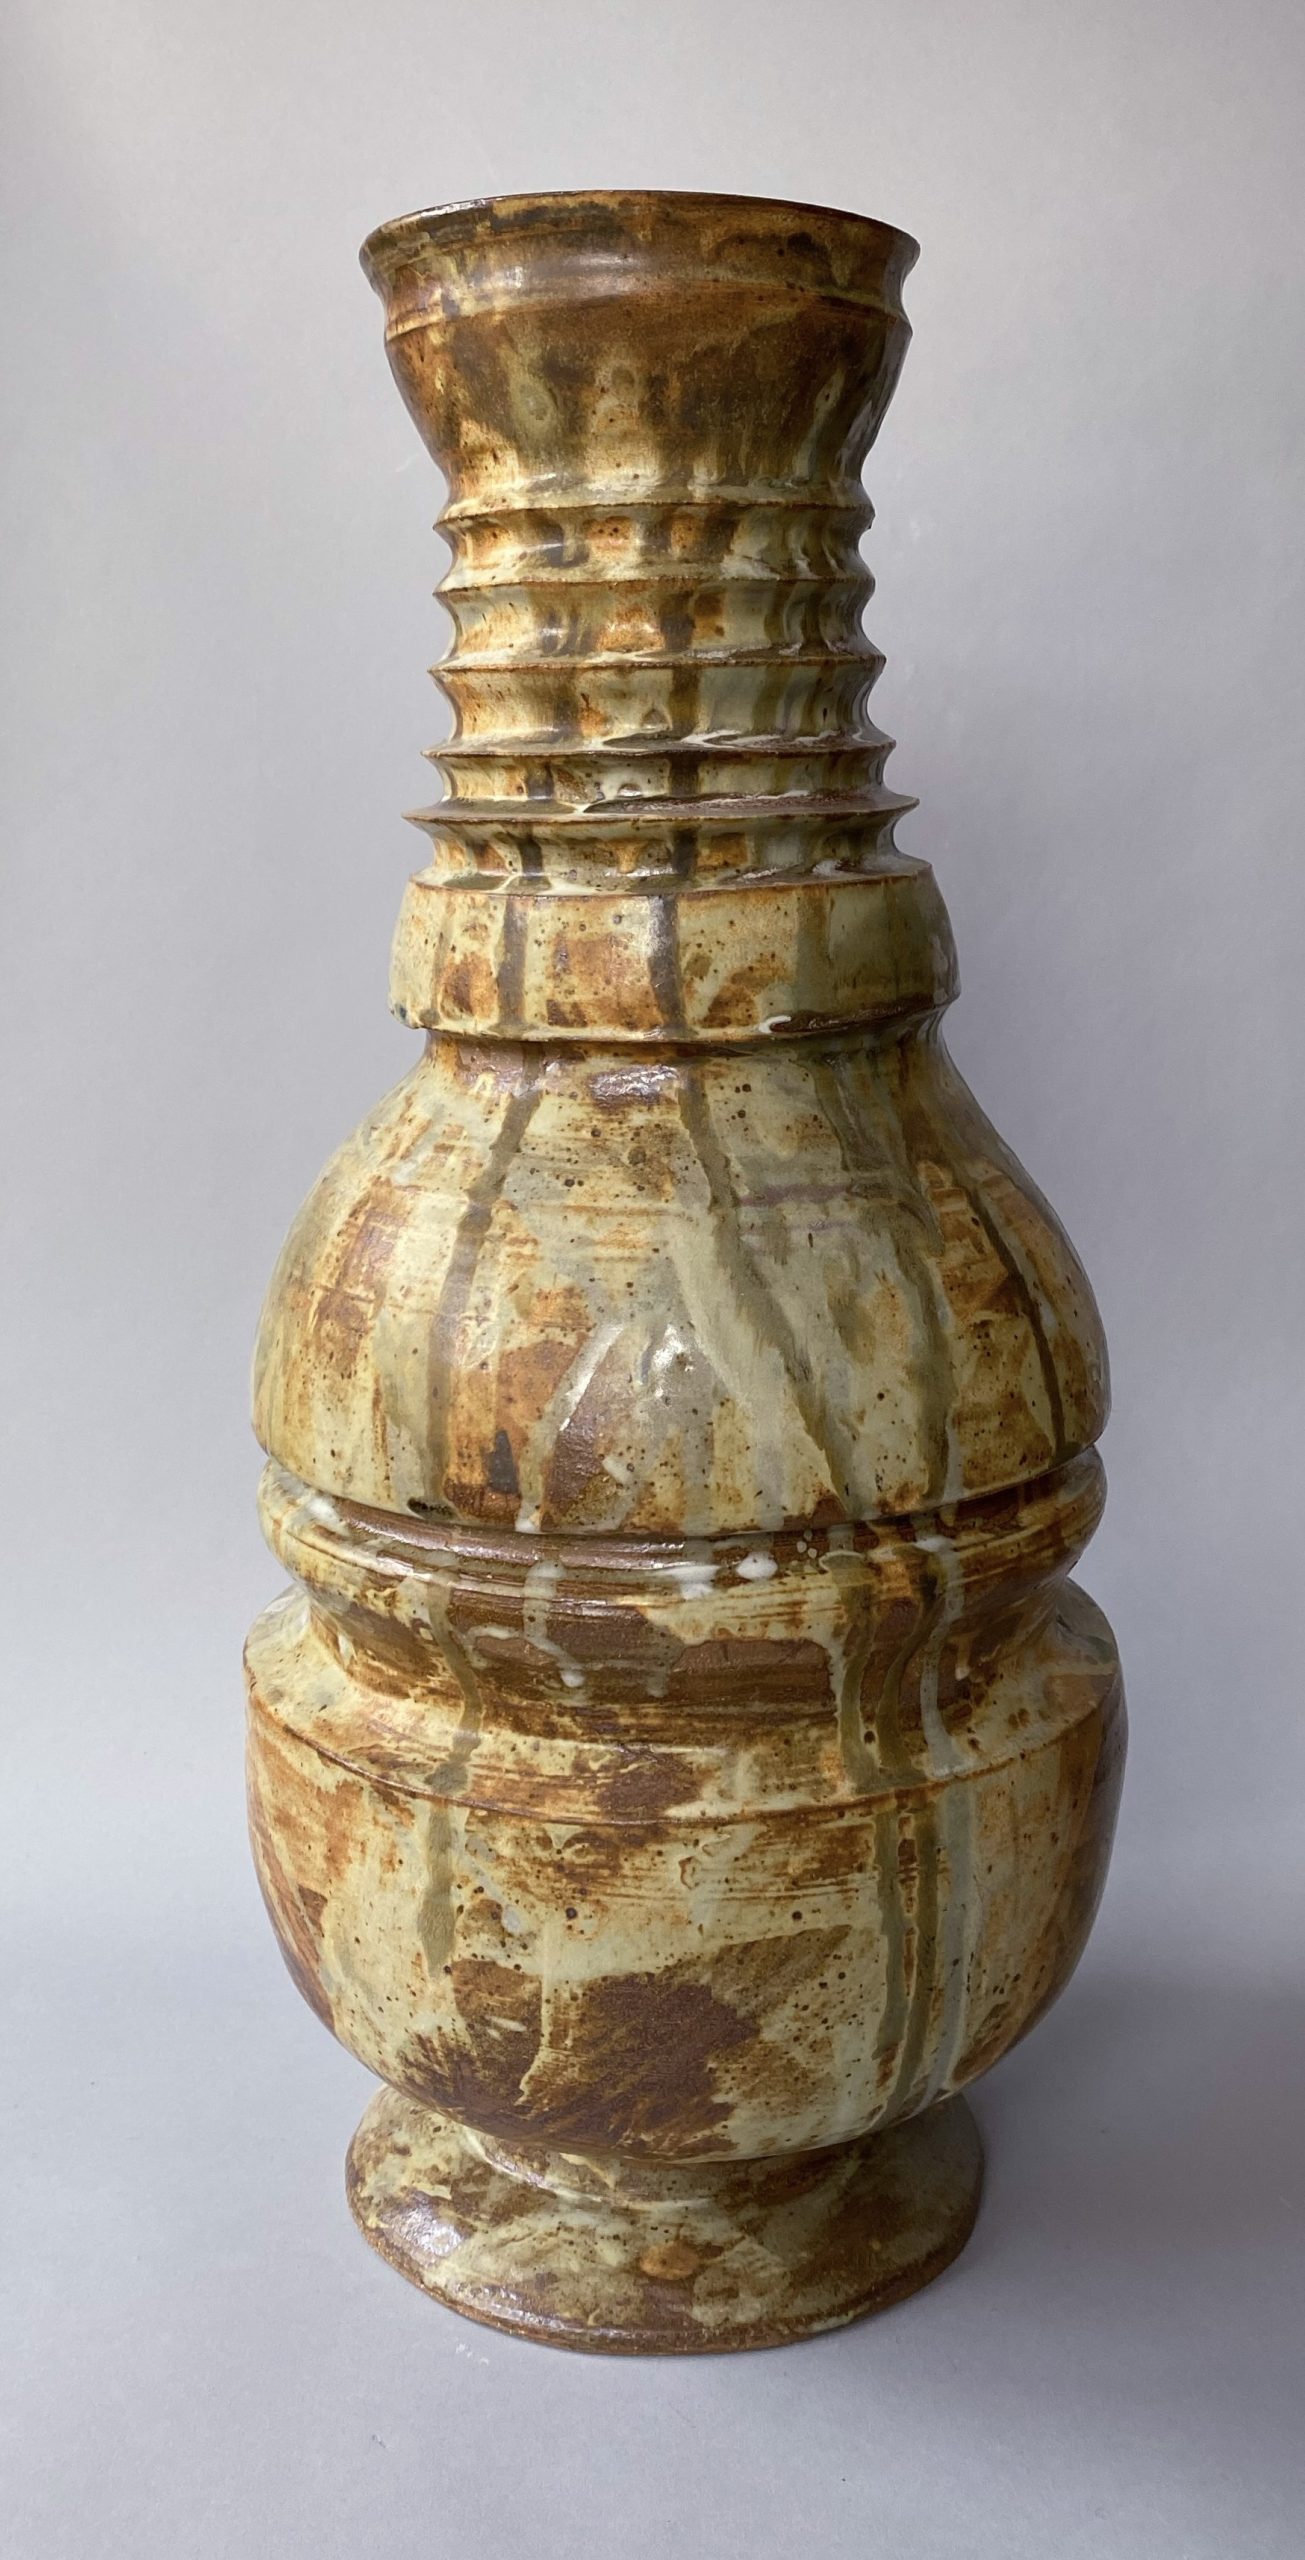 Architectural composite stoneware vase by Reuben Sinha